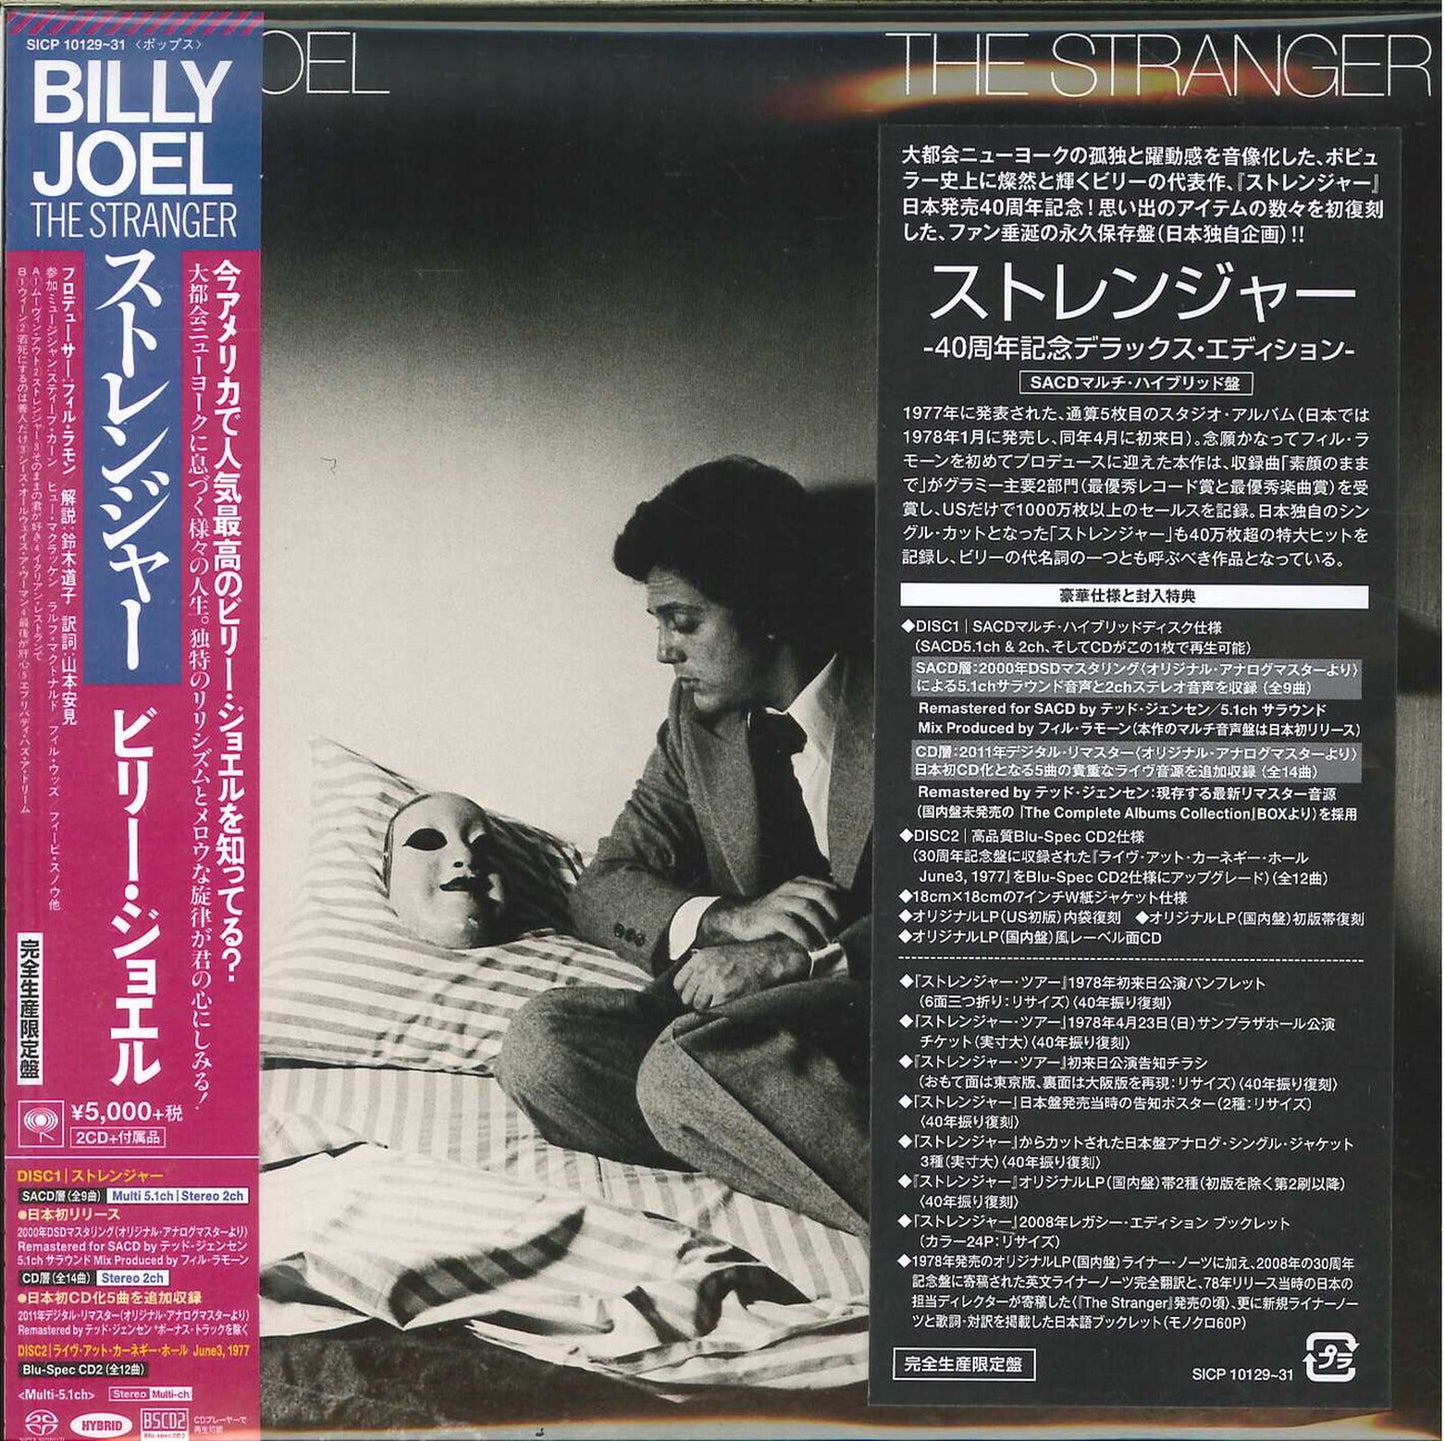 Billy Joel - The Stranger 40Th Anniversary Deluxe Edition - Japan  7inch Mini LP SACD Hybrid+Blu-spec CD2 Bonus Track Limited Edition